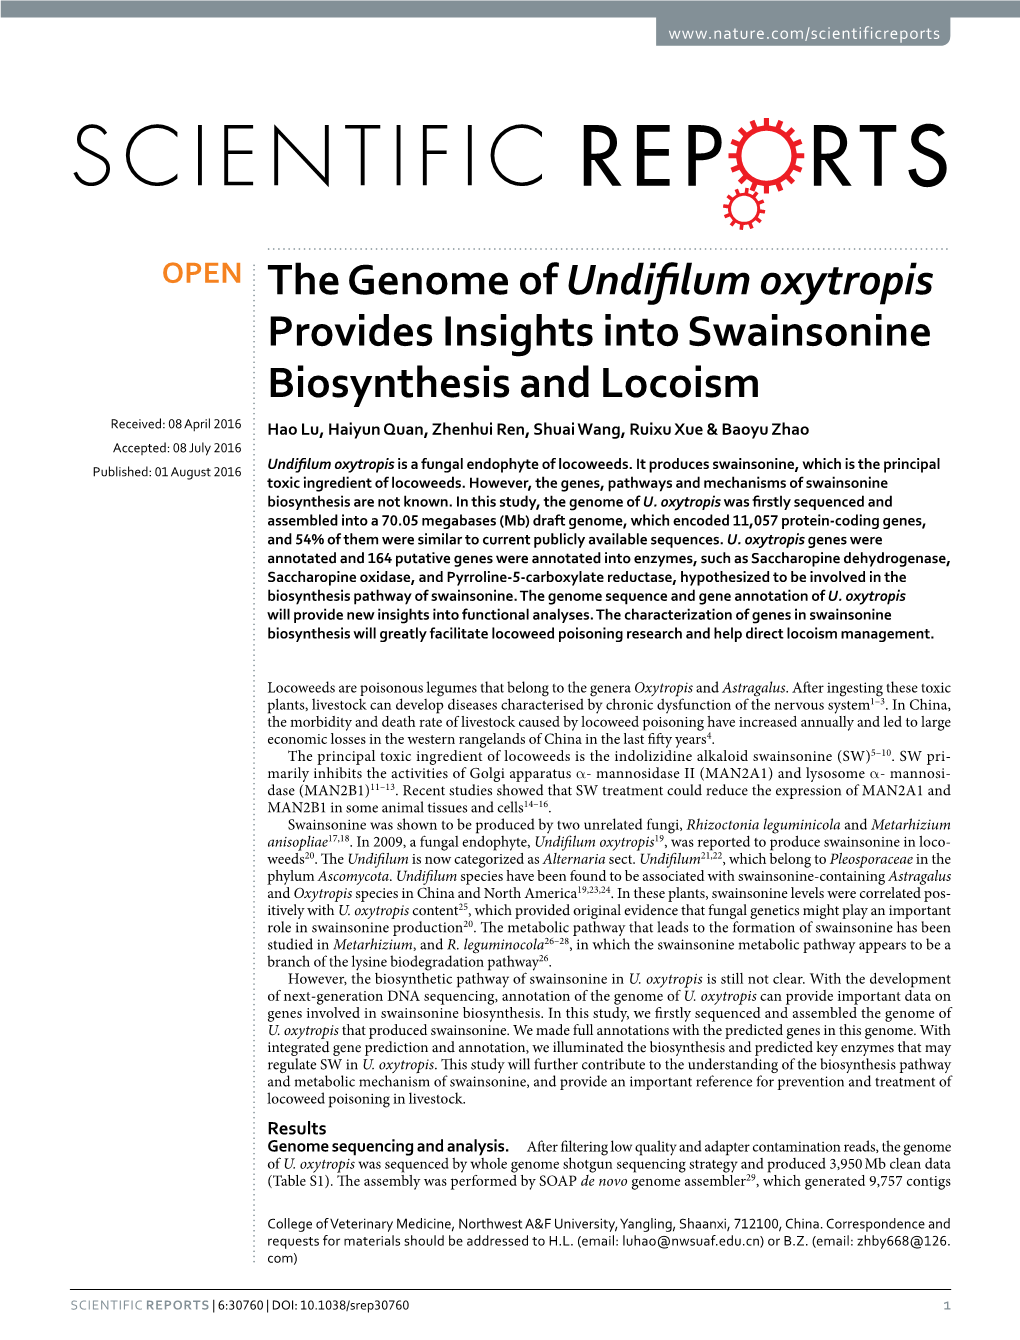 The Genome of Undifilum Oxytropis Provides Insights Into Swainsonine